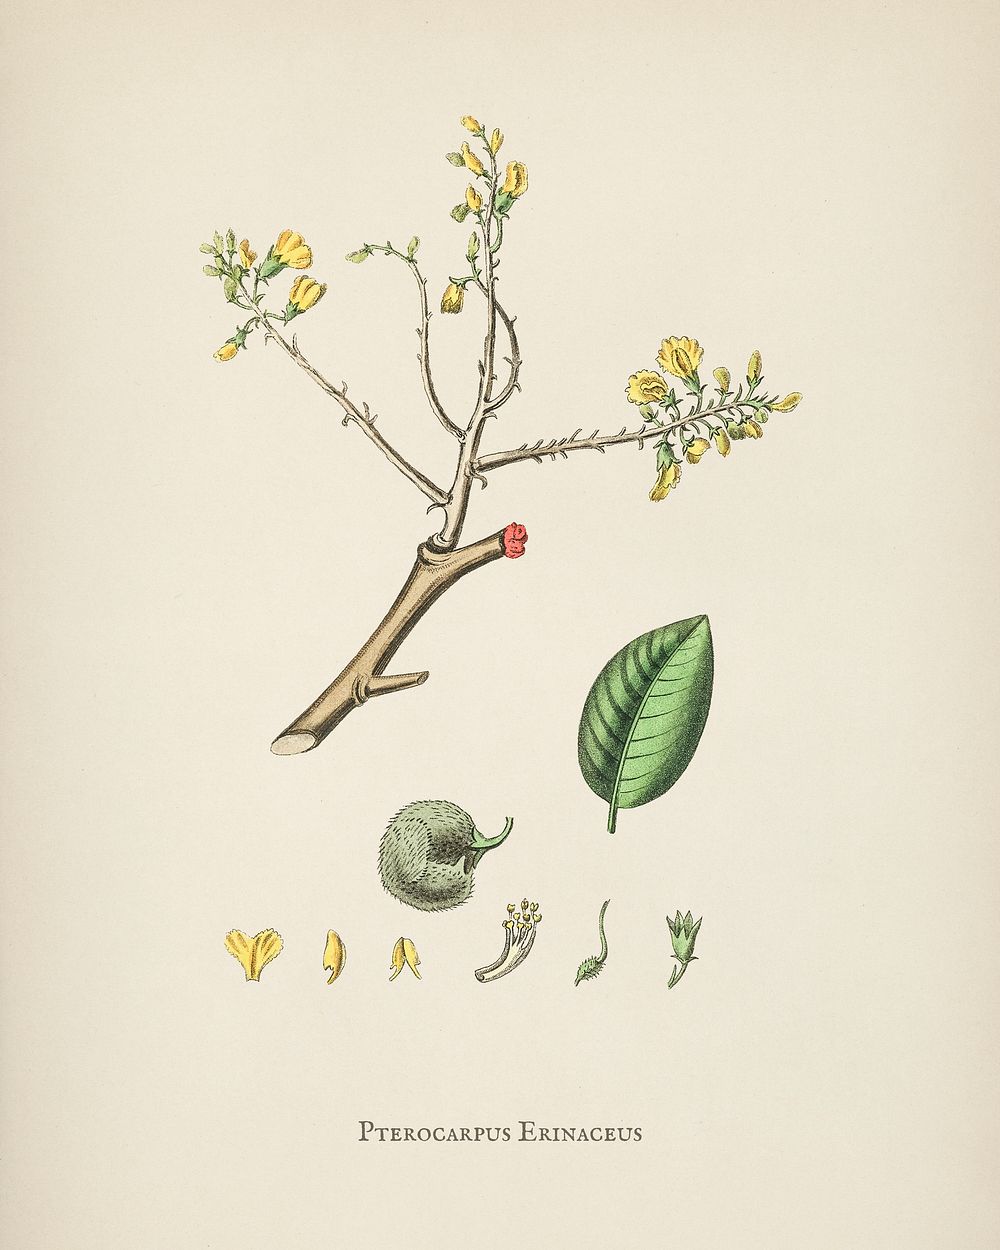 Barwood (Pterocarpus erinaceus) illustration from Medical Botany (1836) by John Stephenson and James Morss Churchill.